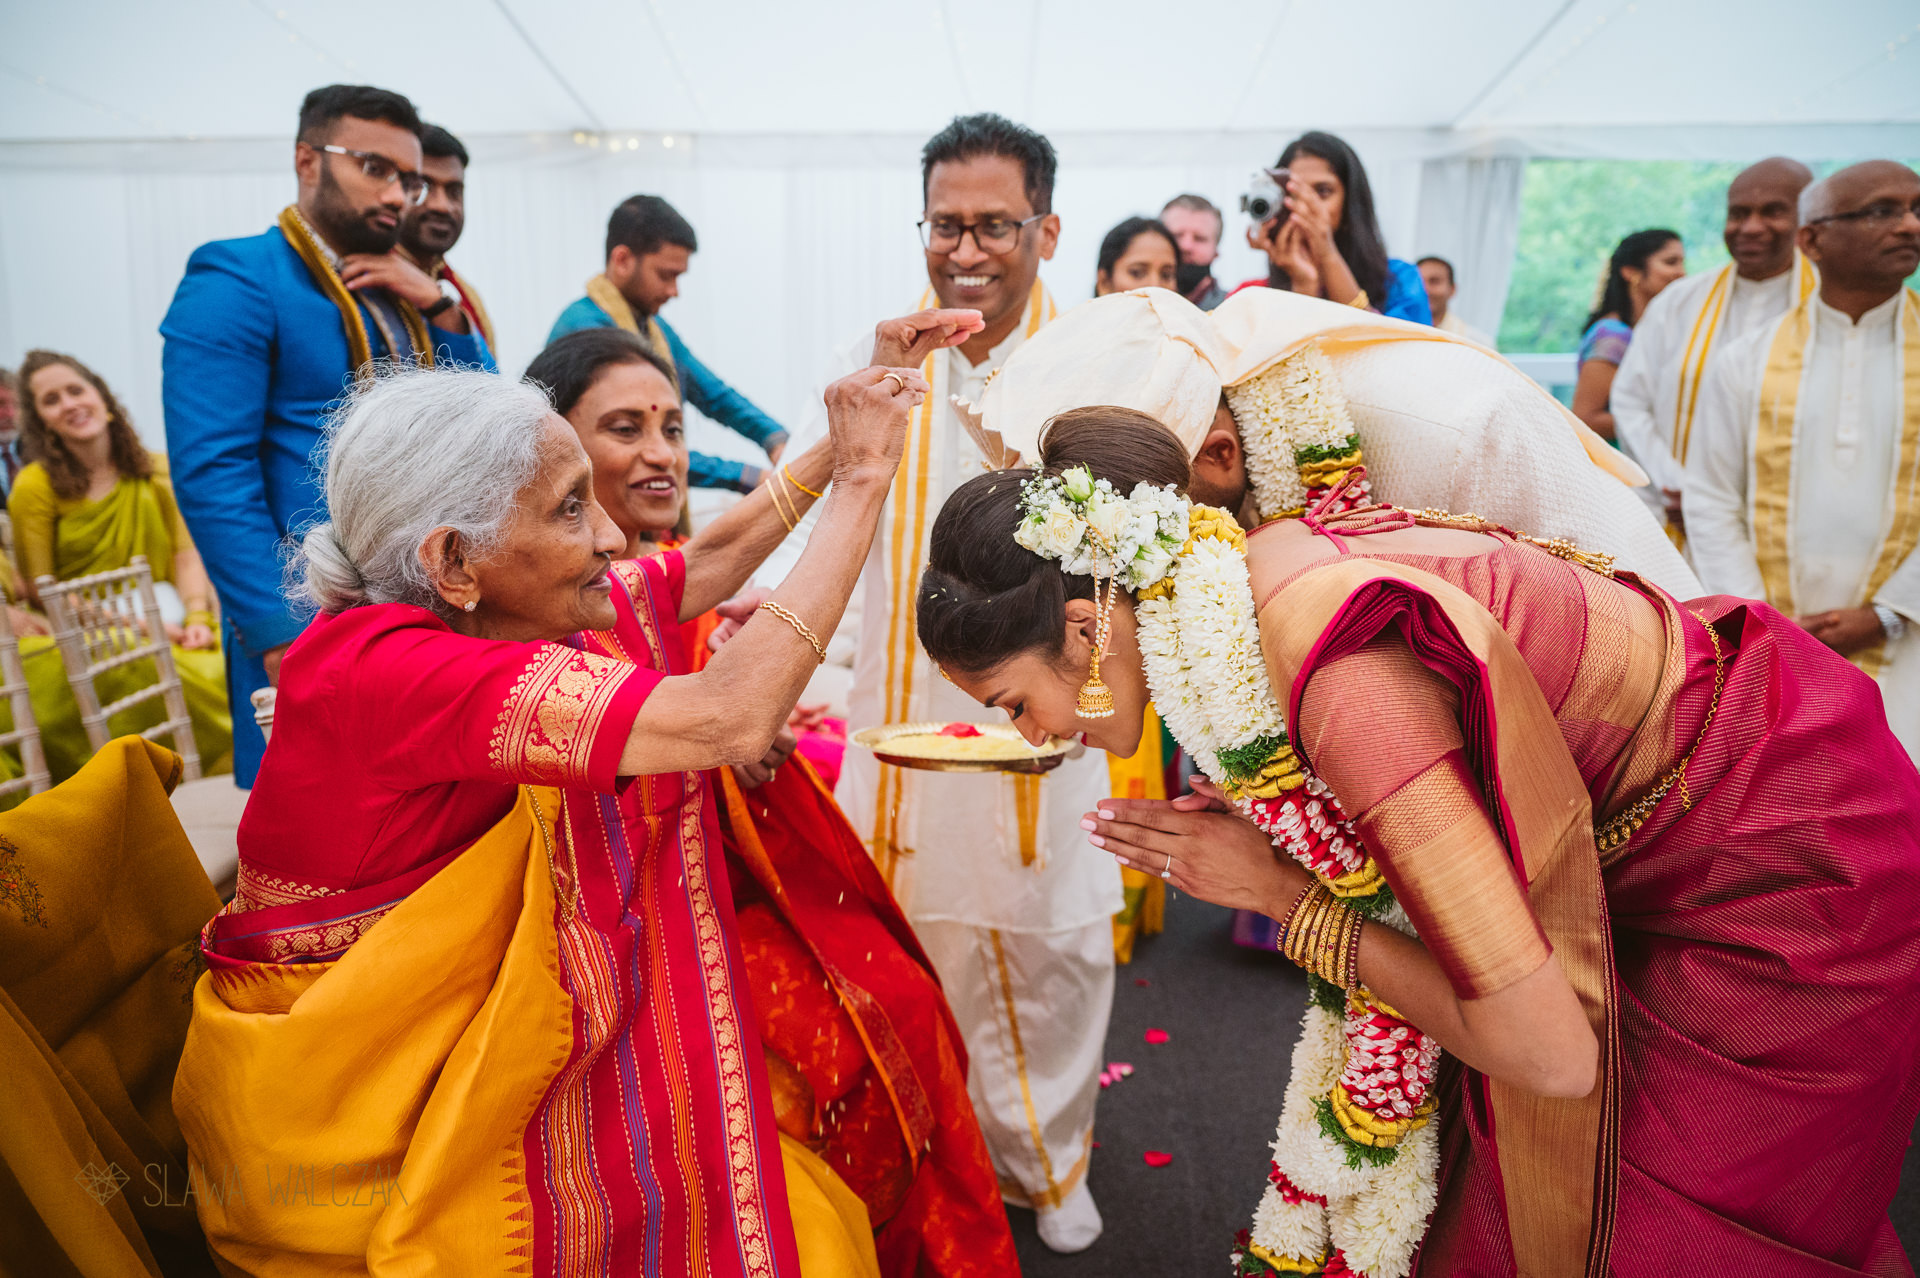 Ditton Manor Tamil Hindu Wedding photos